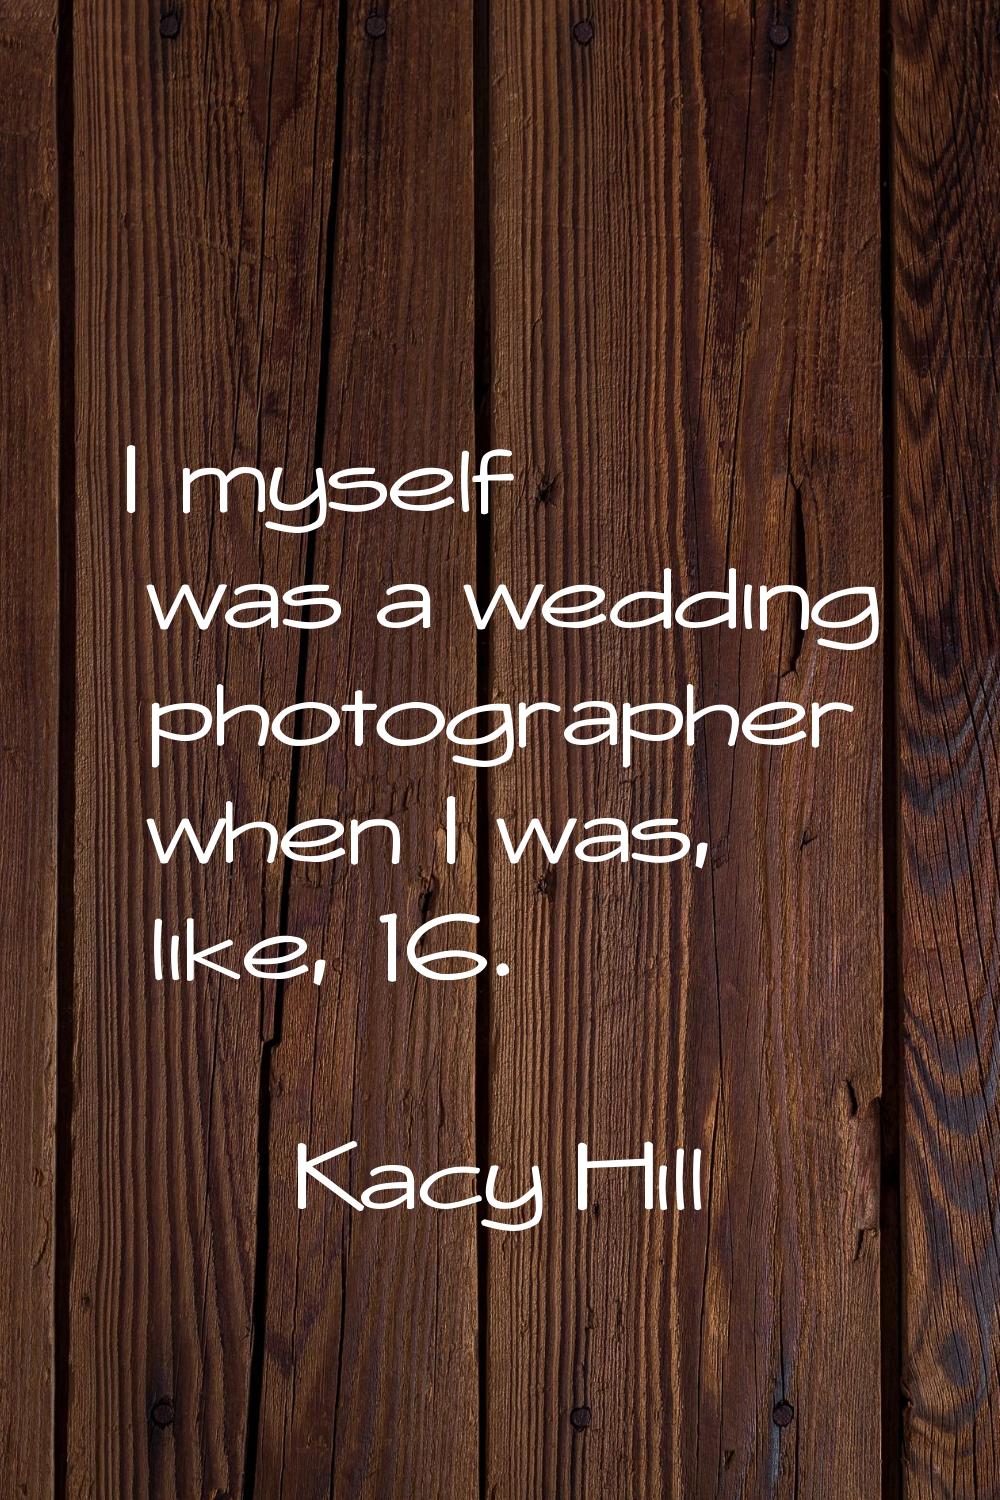 I myself was a wedding photographer when I was, like, 16.